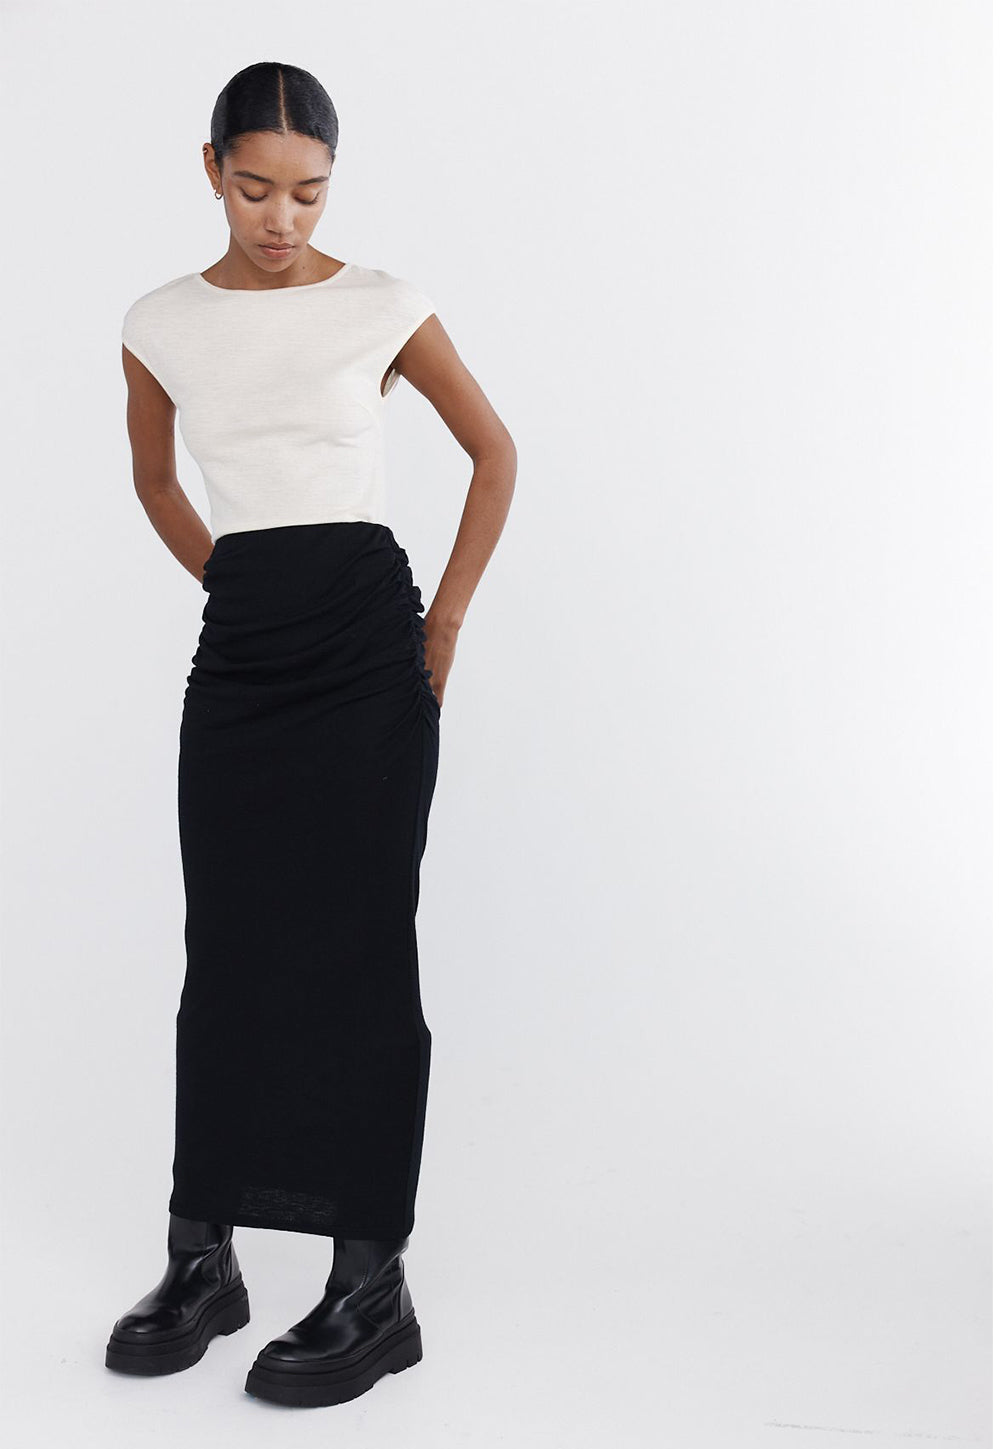 Sofina Skirt - Black sold by Angel Divine